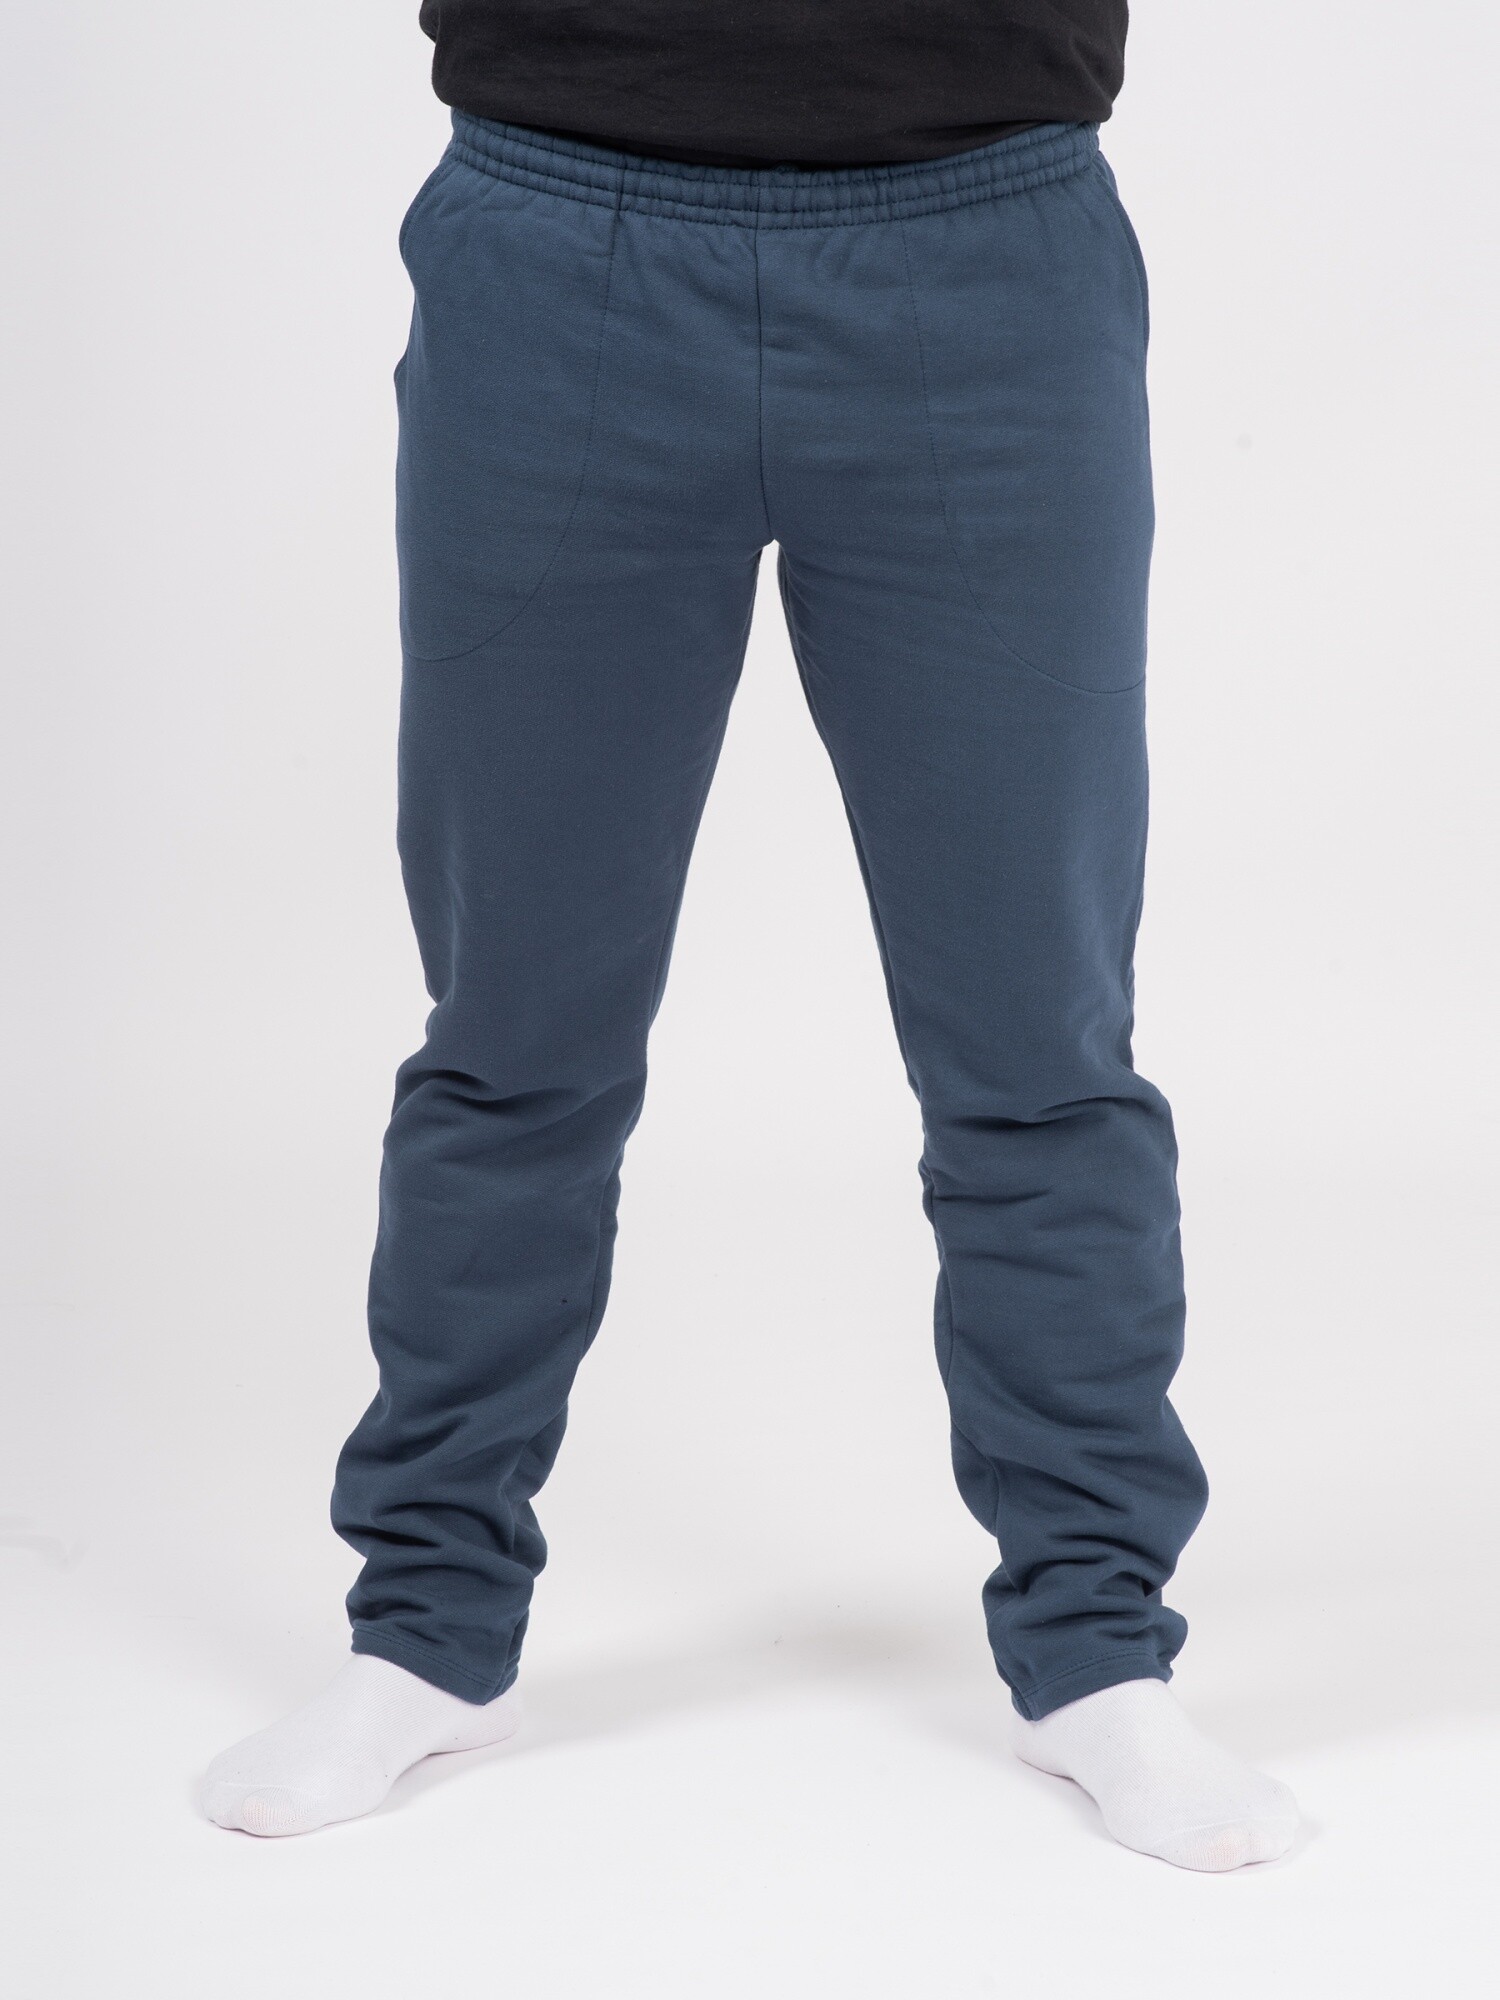 https://f.fcdn.app/imgs/4cf39b/www.hering.com.uy/her/94bd/original/catalogo/E50A-ADNEN-1/2000-2000/pantalon-deportivo-adulto-unissex-azul.jpg